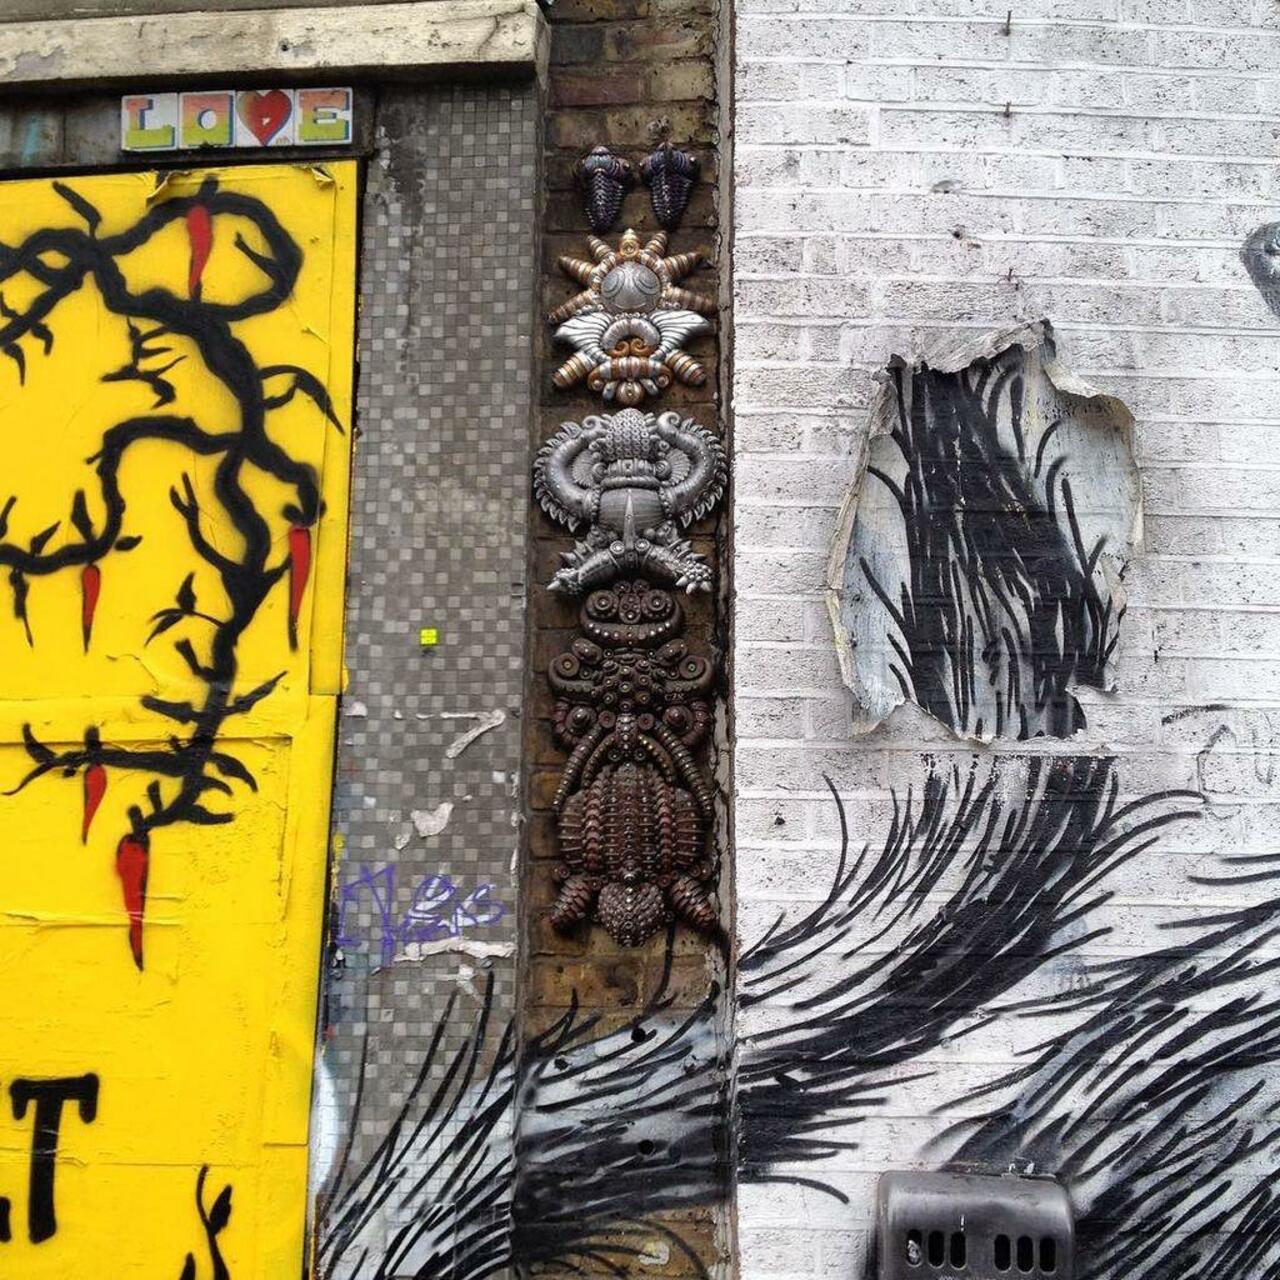 #citizenkane & tail of #ROA #streetart #streetartlondon #graffiti #london #thisislondon by isadarko http://t.co/Jq1bSFXV1w